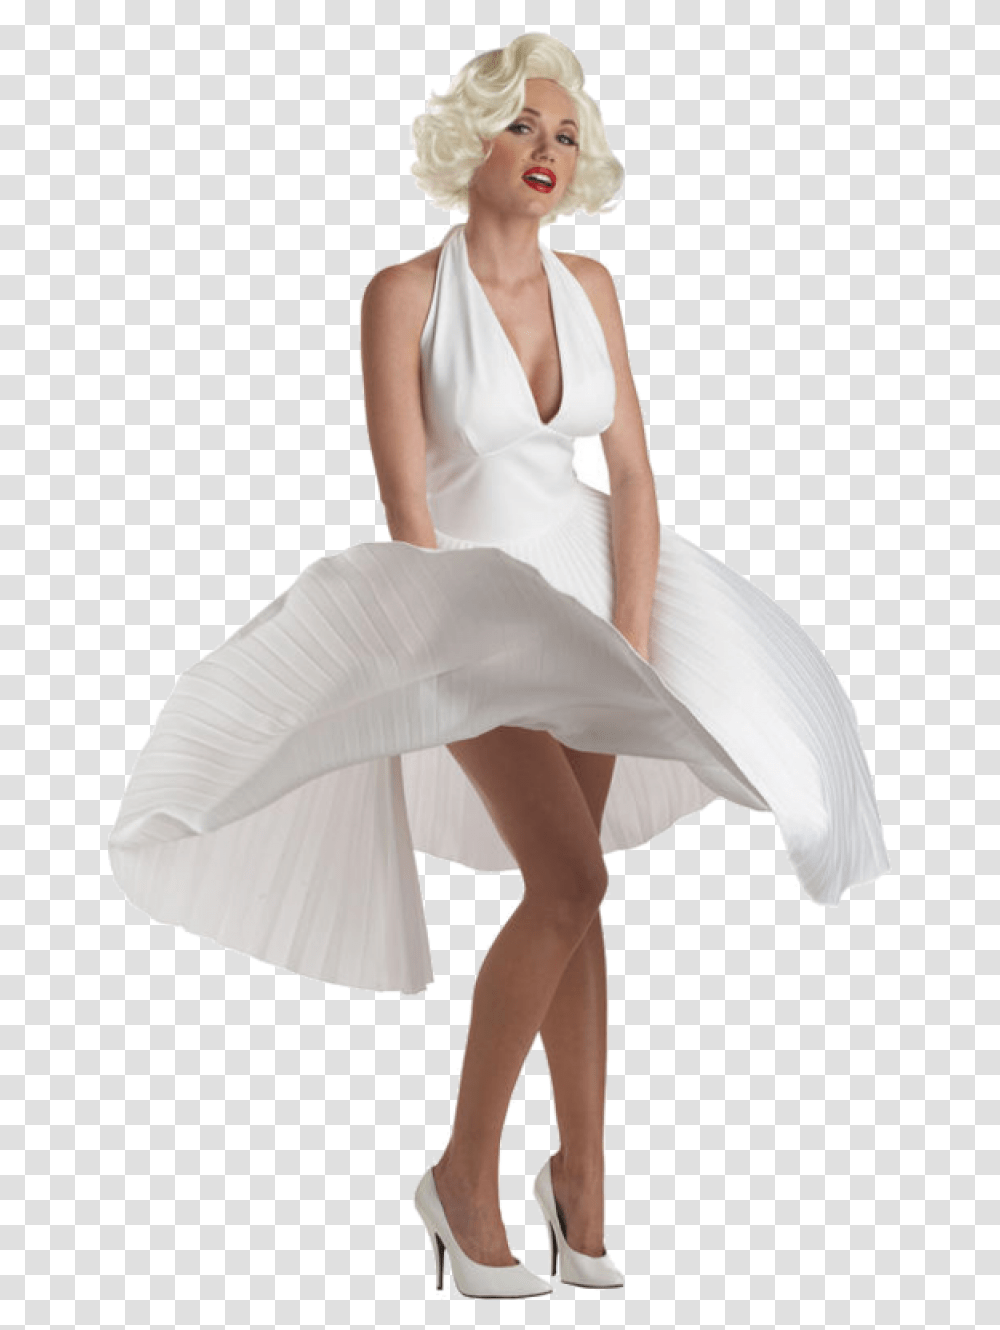 Marilyn Monroe Image Marilyn Monroe Pinup Girl, Person, Dance, Dance Pose Transparent Png